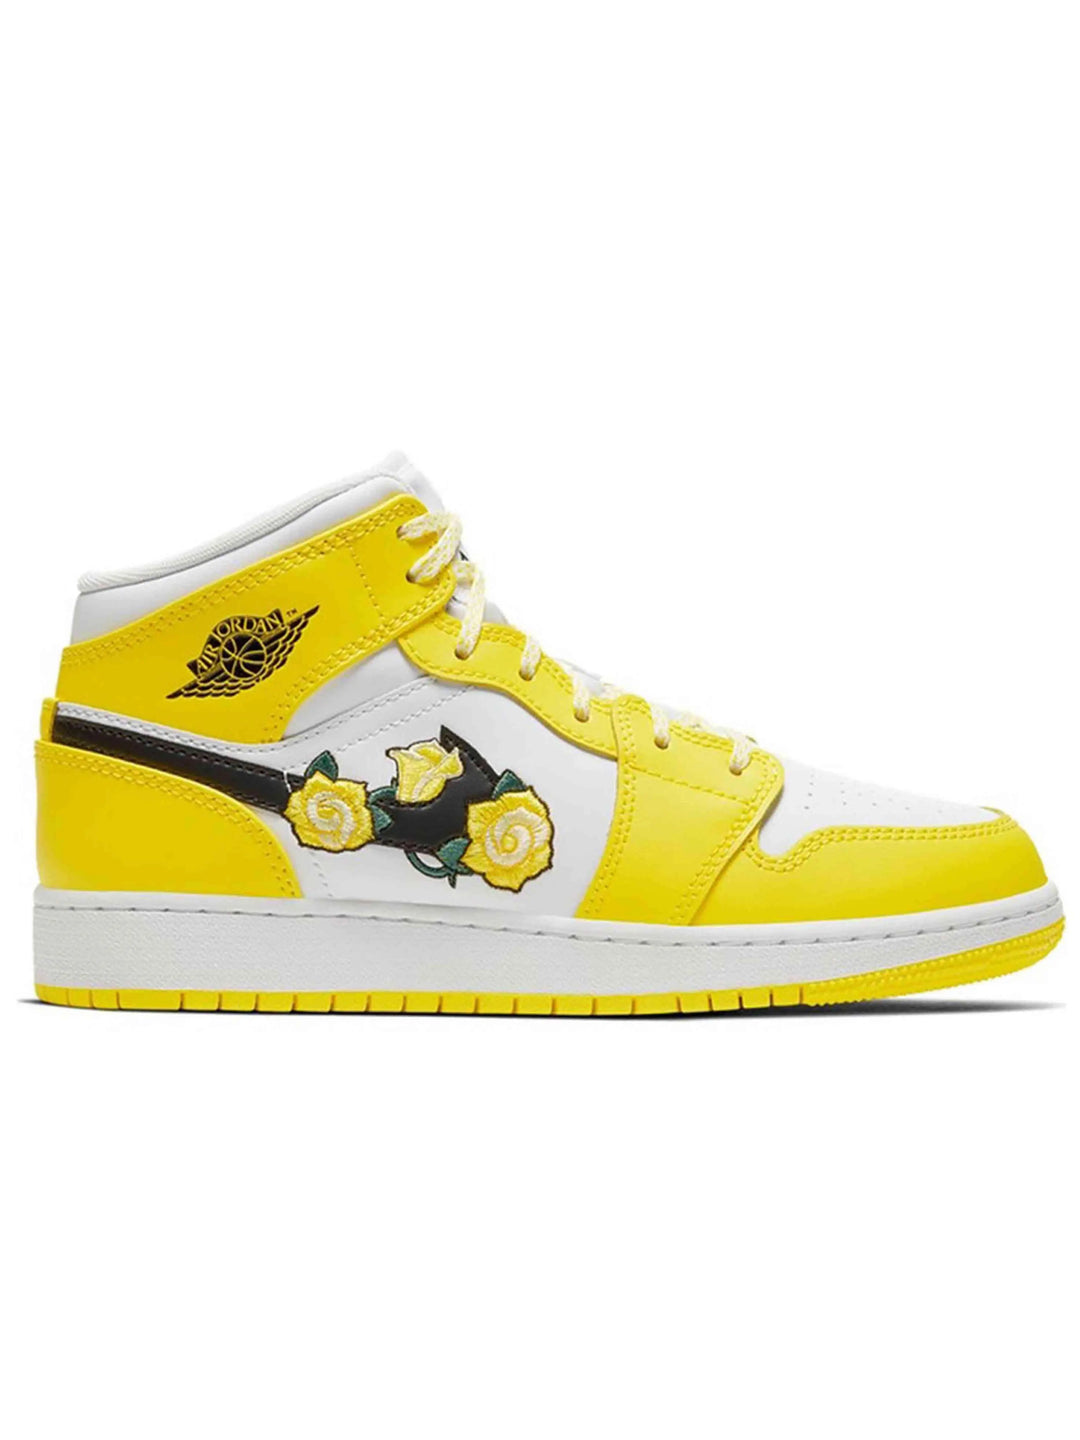 Nike Air Jordan 1 Mid Dynamic Yellow Floral (GS) Jordan Brand